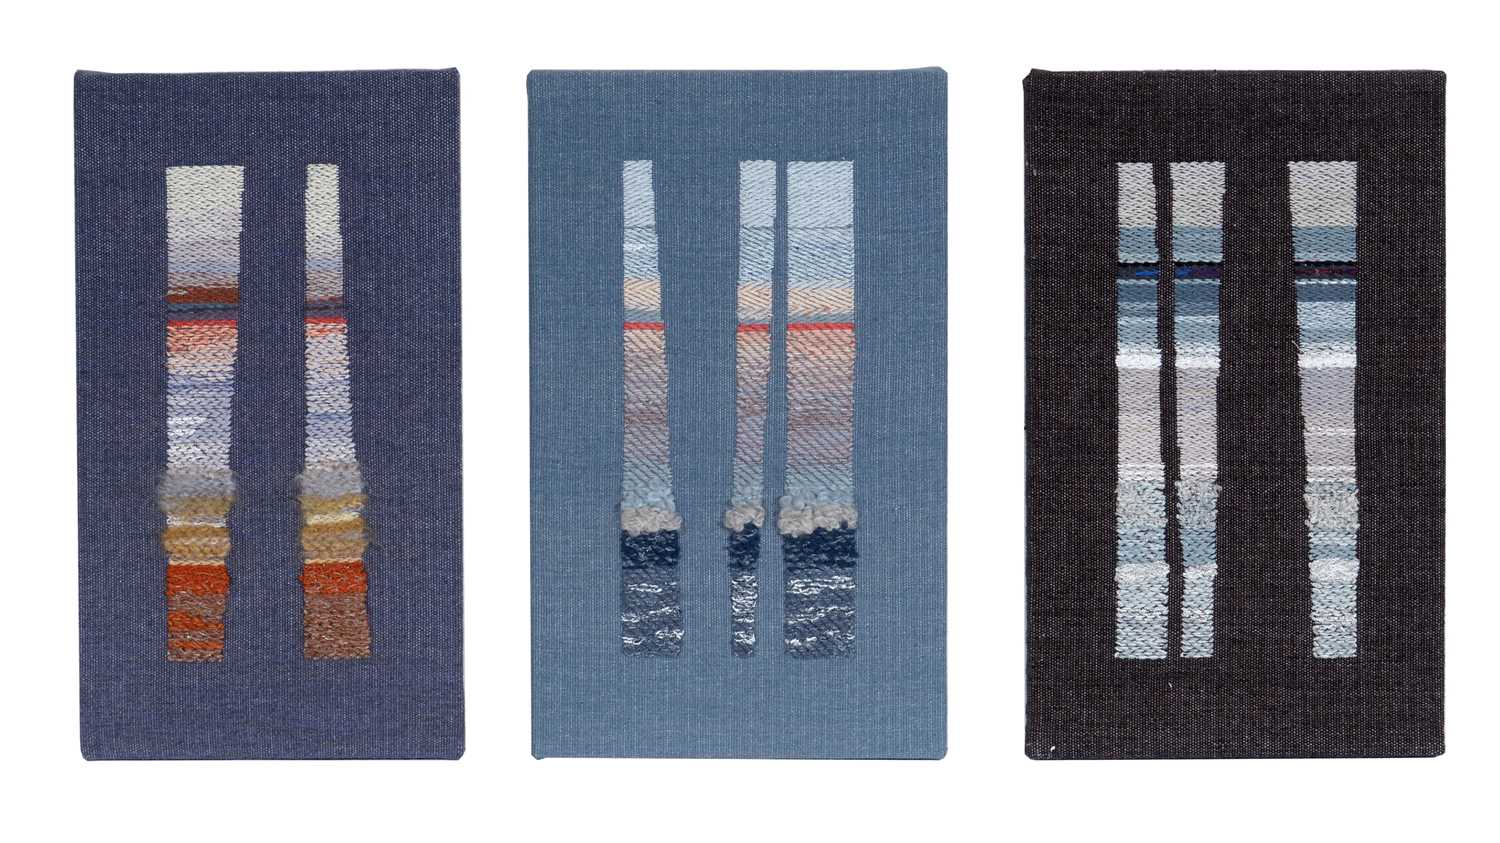 Lot 756 - Shirley Ross - Volanic Strata Triptych | needlepoint